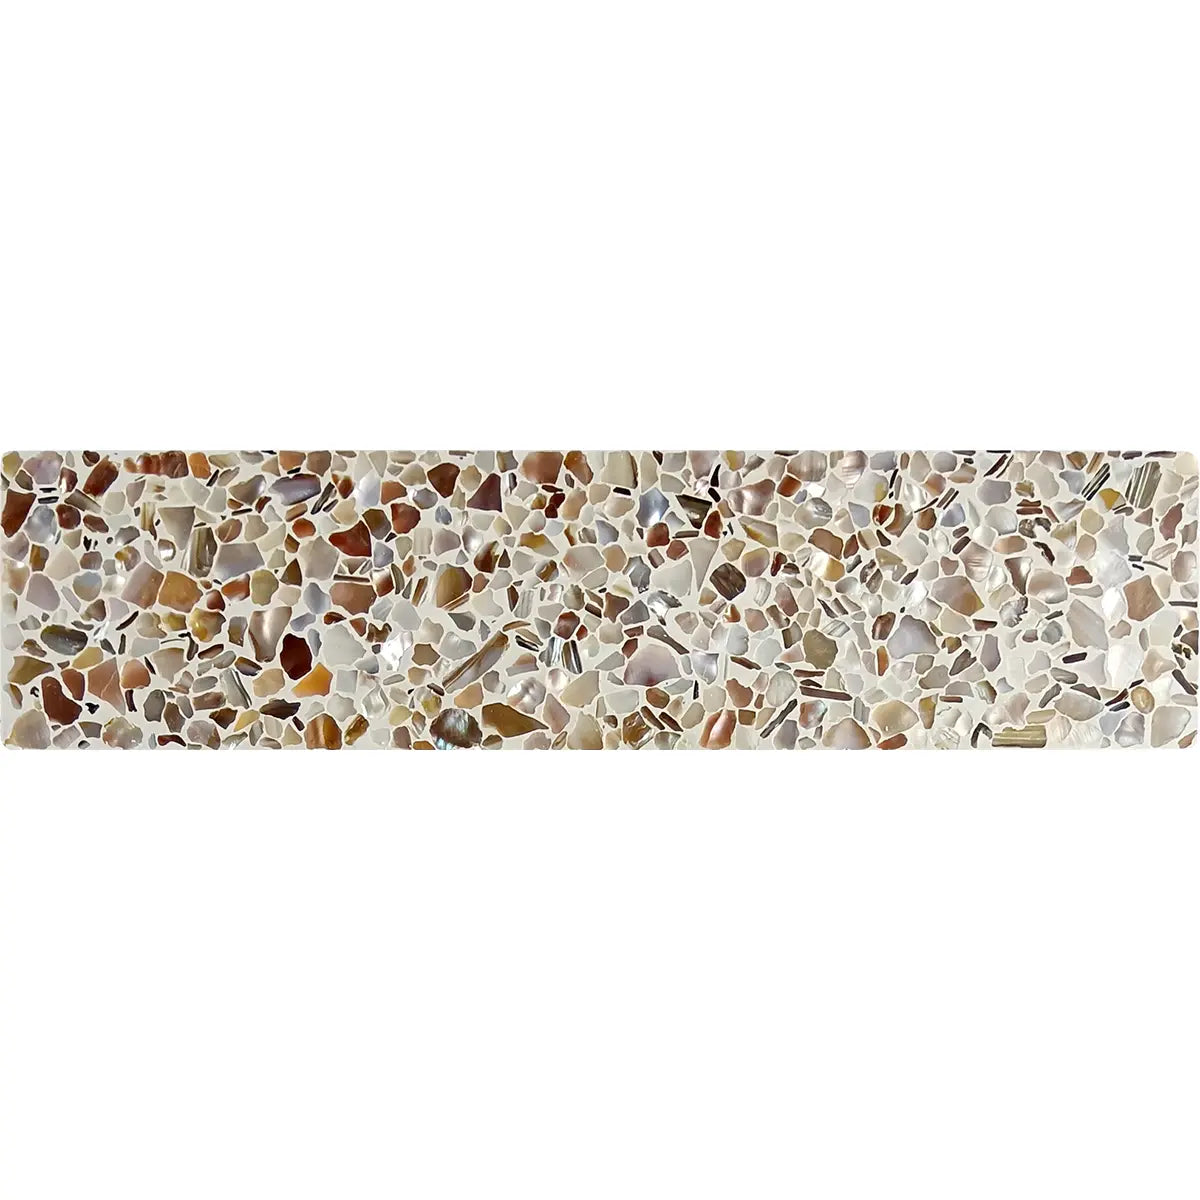 Corazza White Sand Shell and Terrazzo Subway Tile